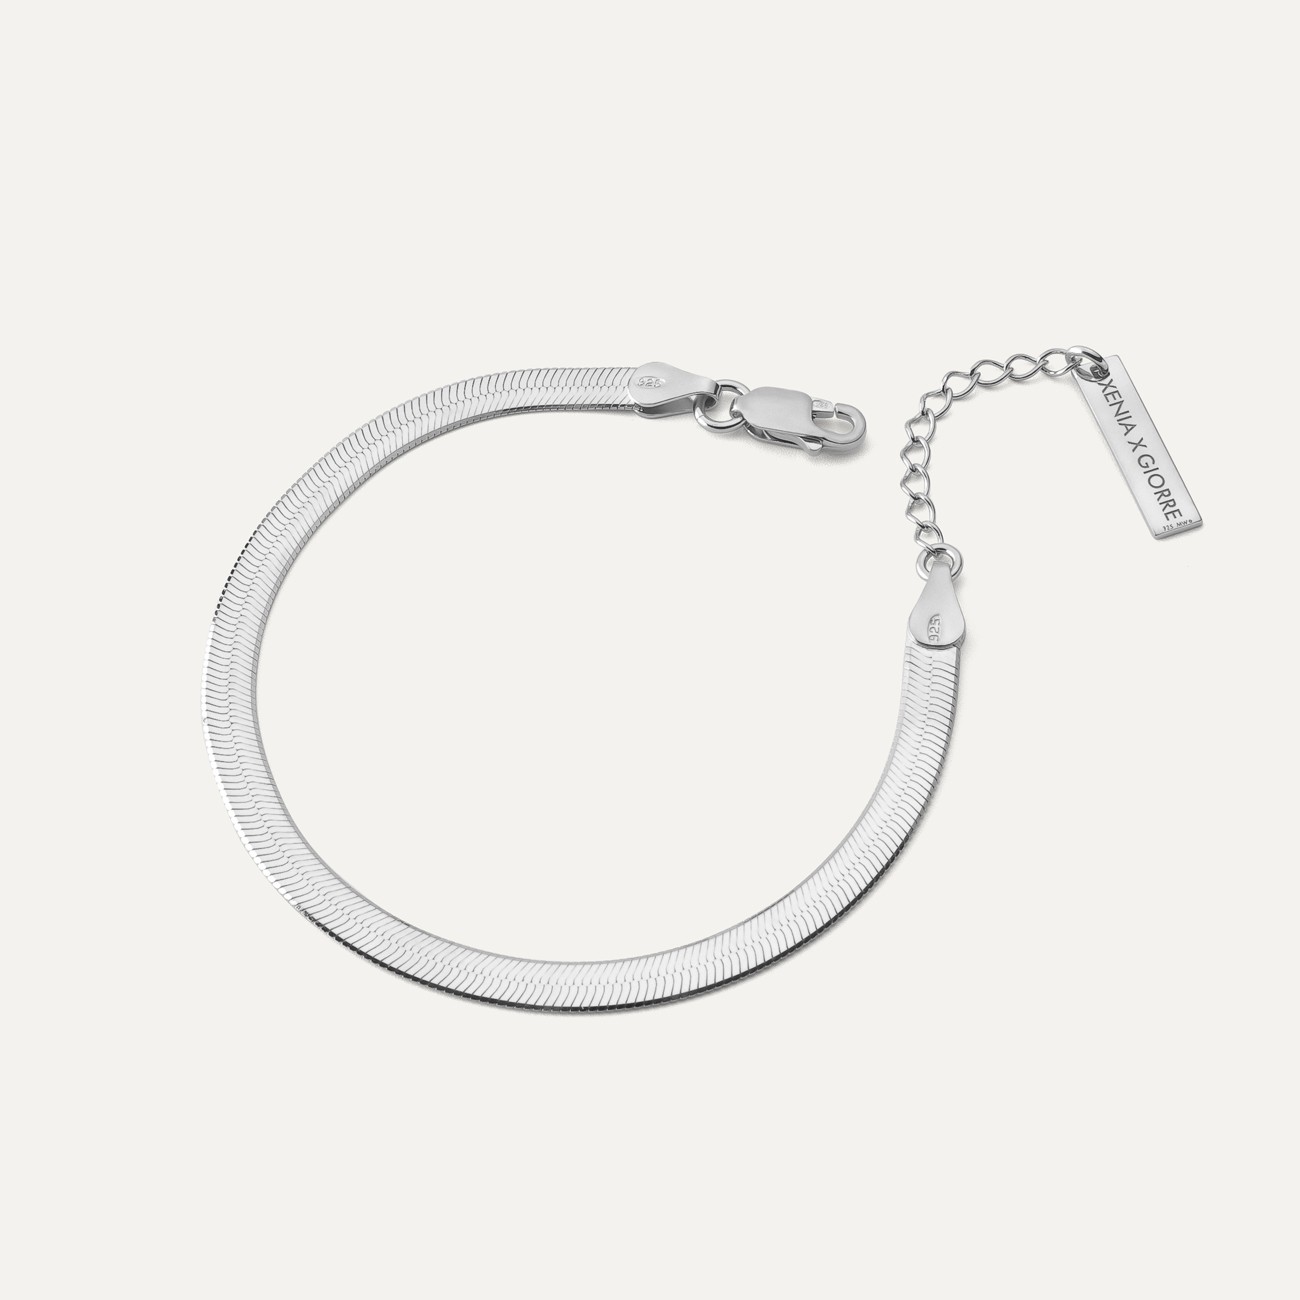 Giorre Woman's Bracelet 37262